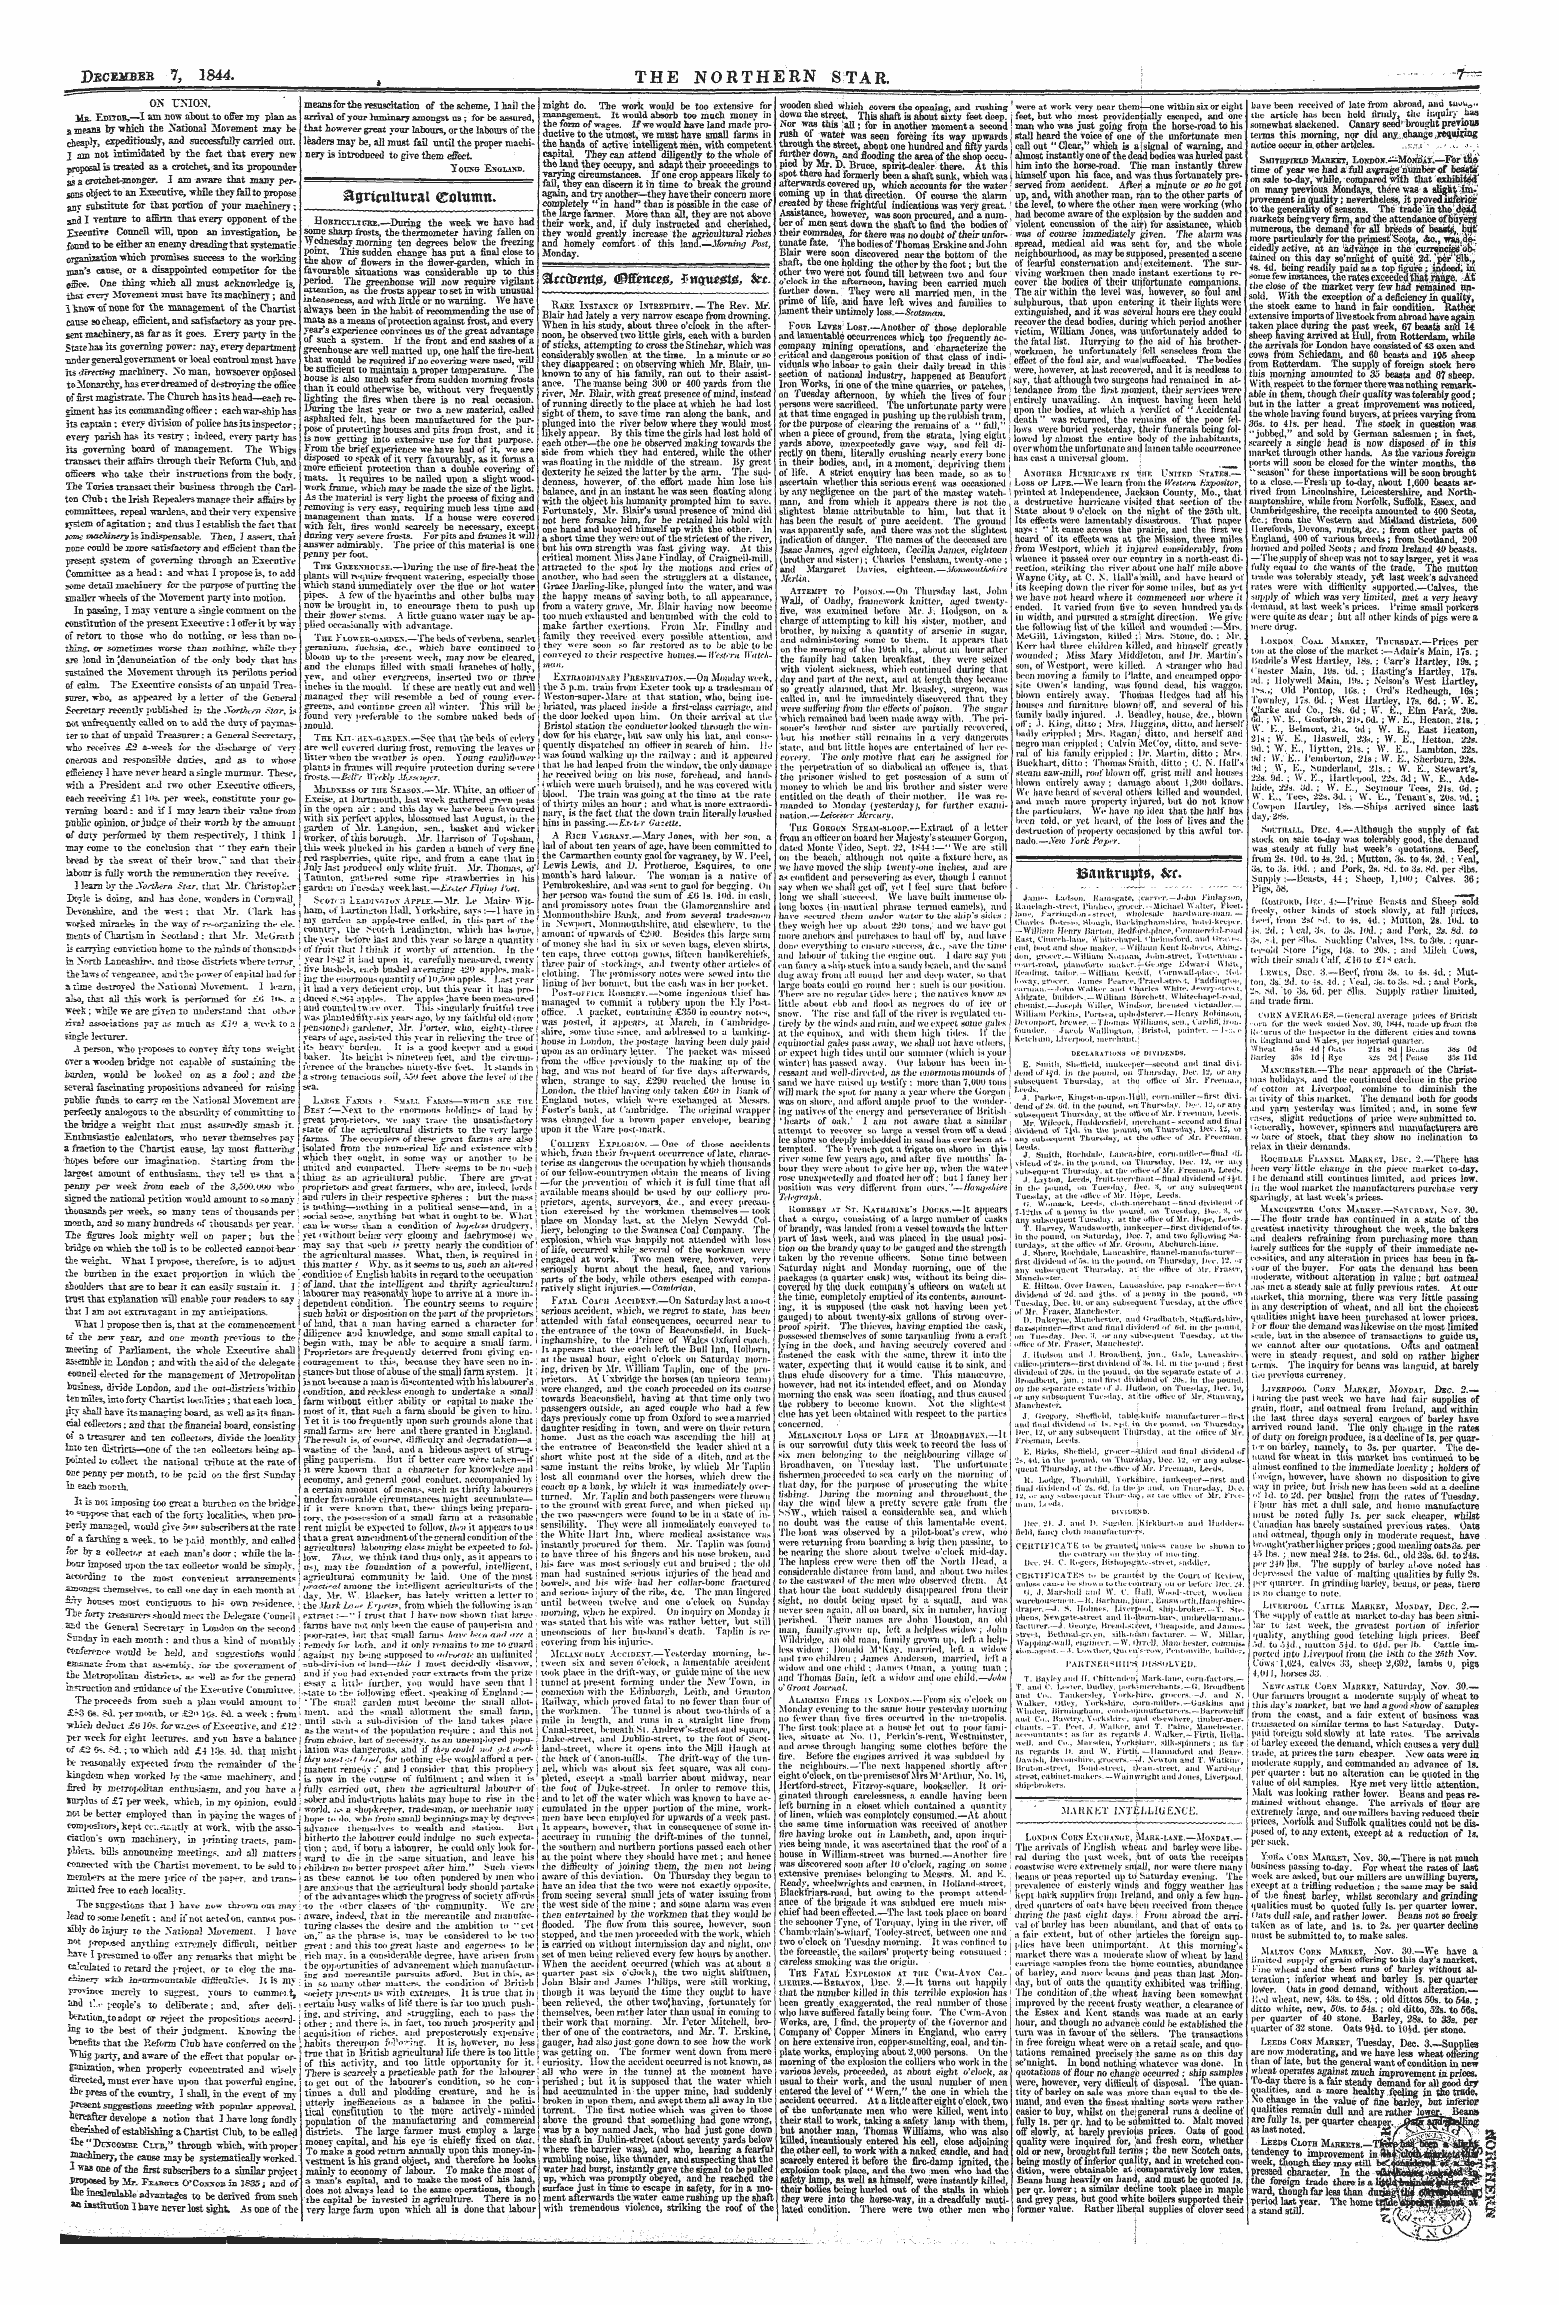 Northern Star (1837-1852): jS F Y, 1st edition - Market Intelligence.